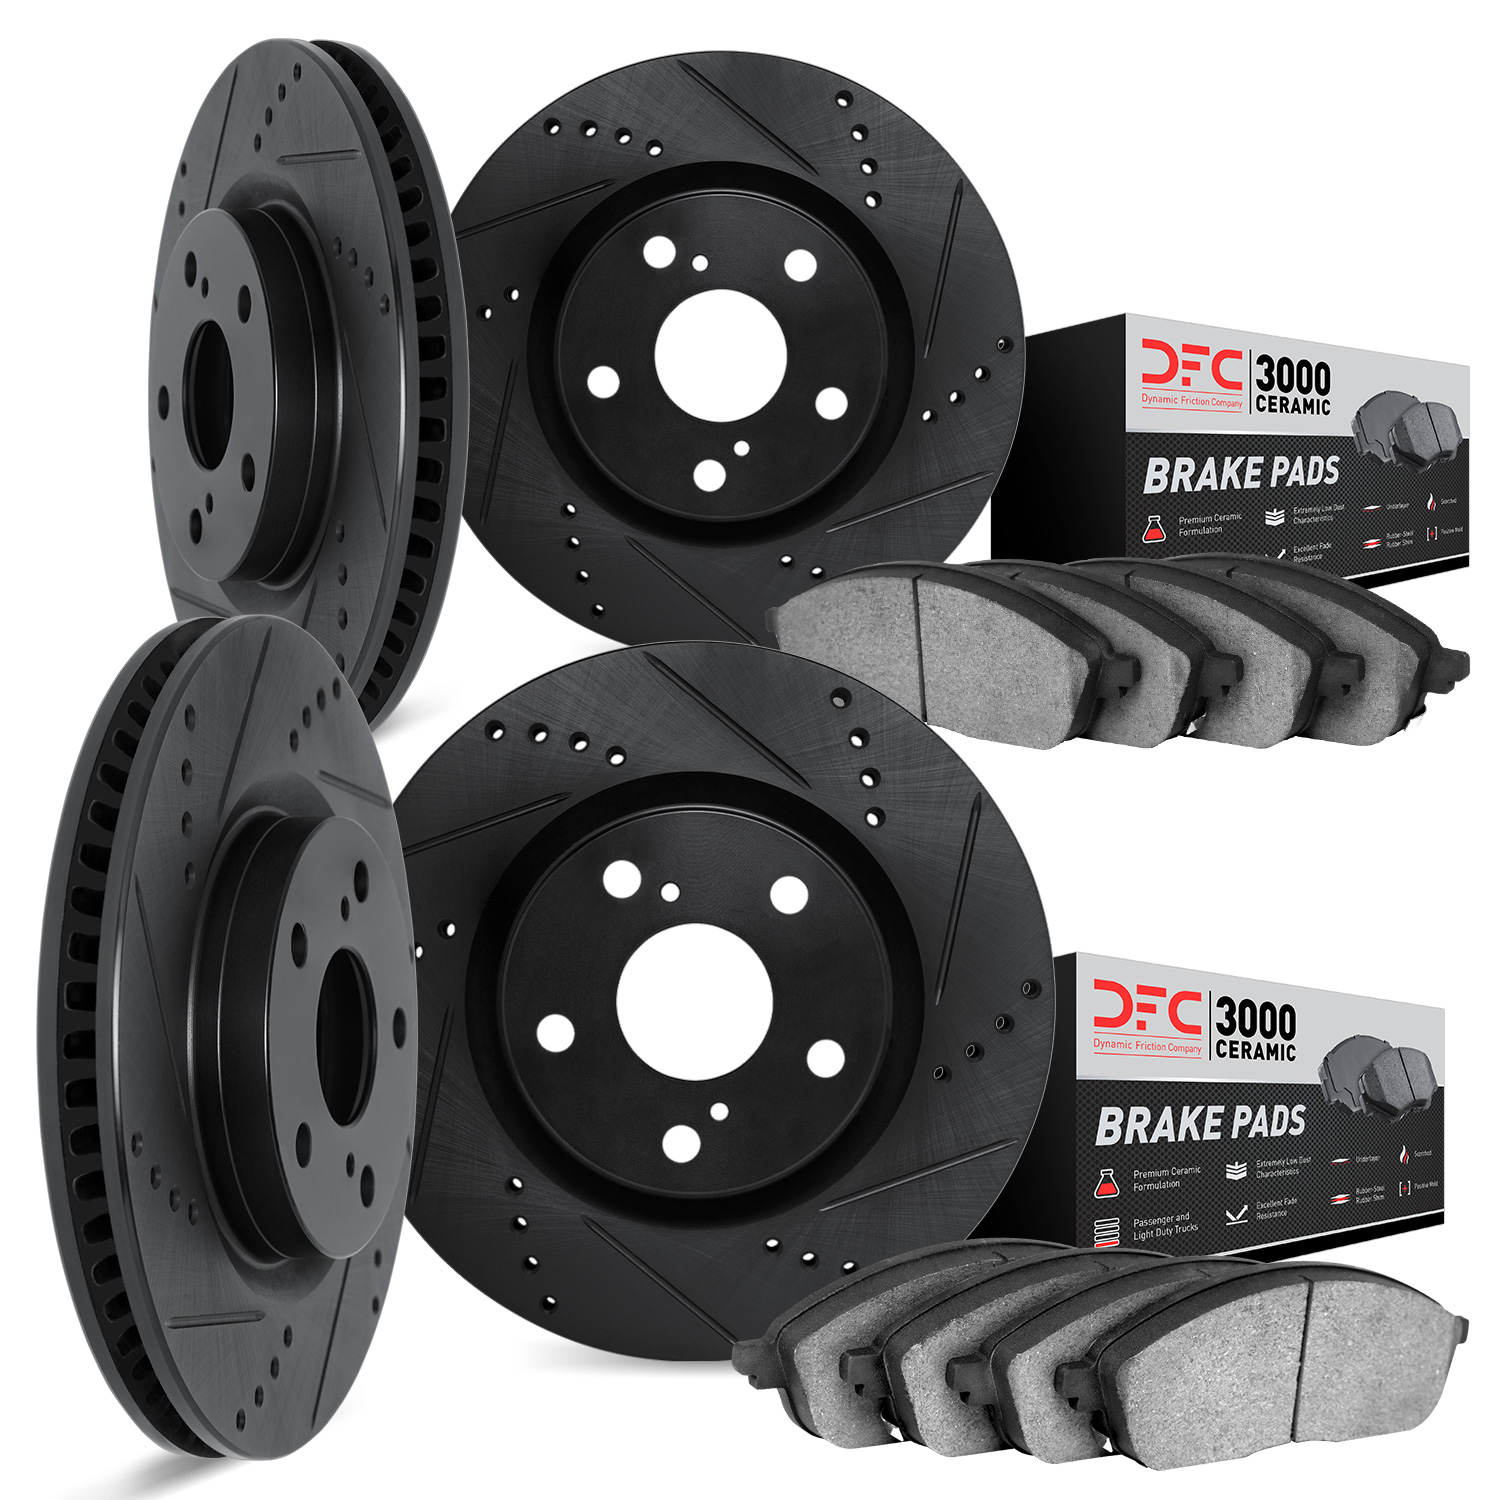 8304-74032 Drilled/Slotted Brake Rotors with 3000-Series Ceramic Brake Pads Kit [Black], 2003-2015 Multiple Makes/Models, Positi